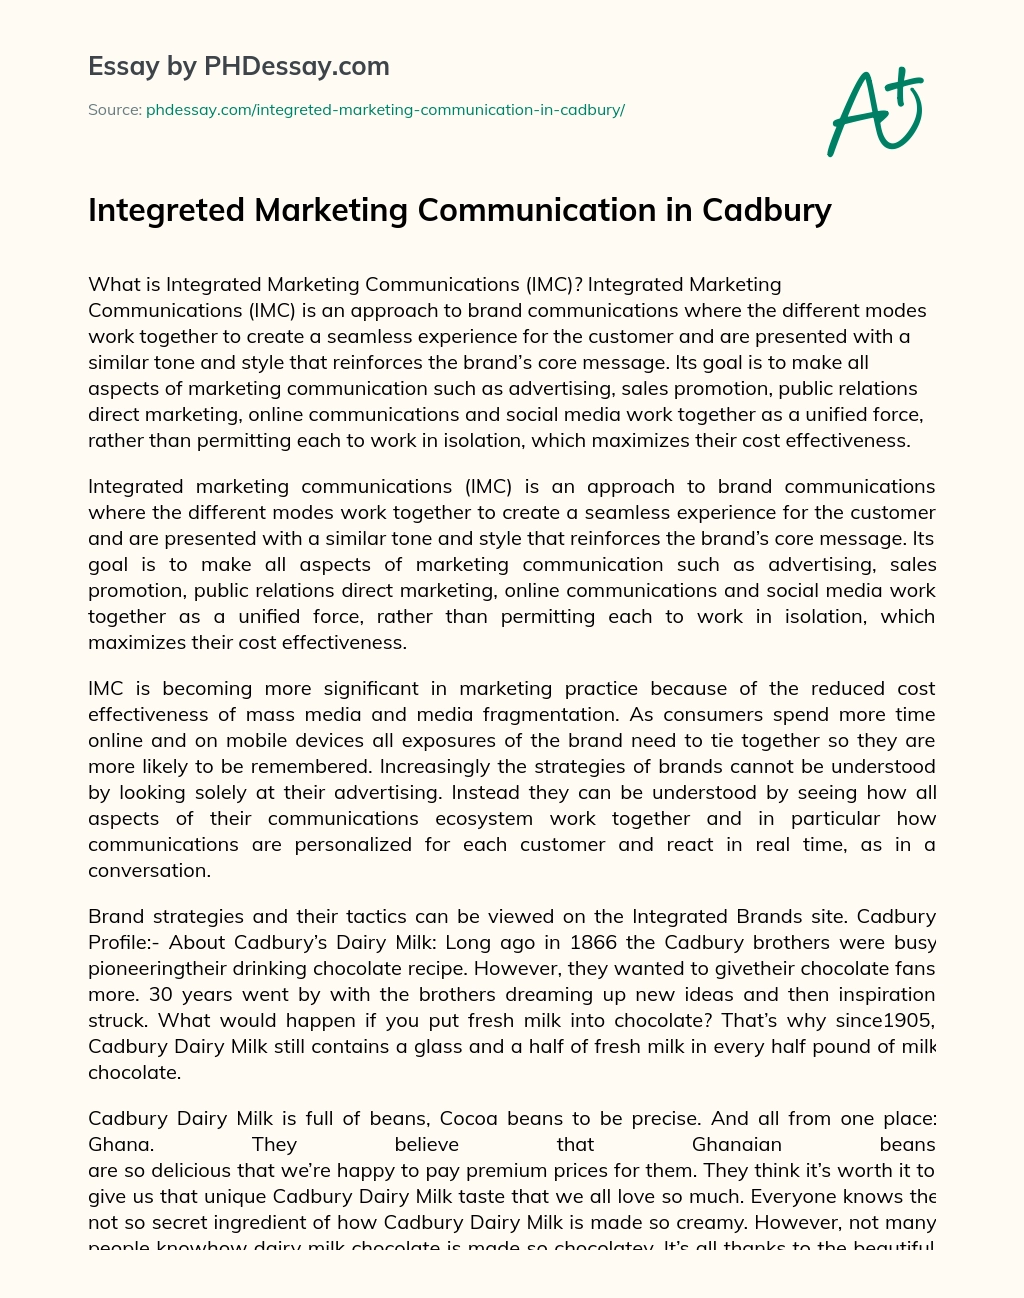 Integreted Marketing Communication in Cadbury essay